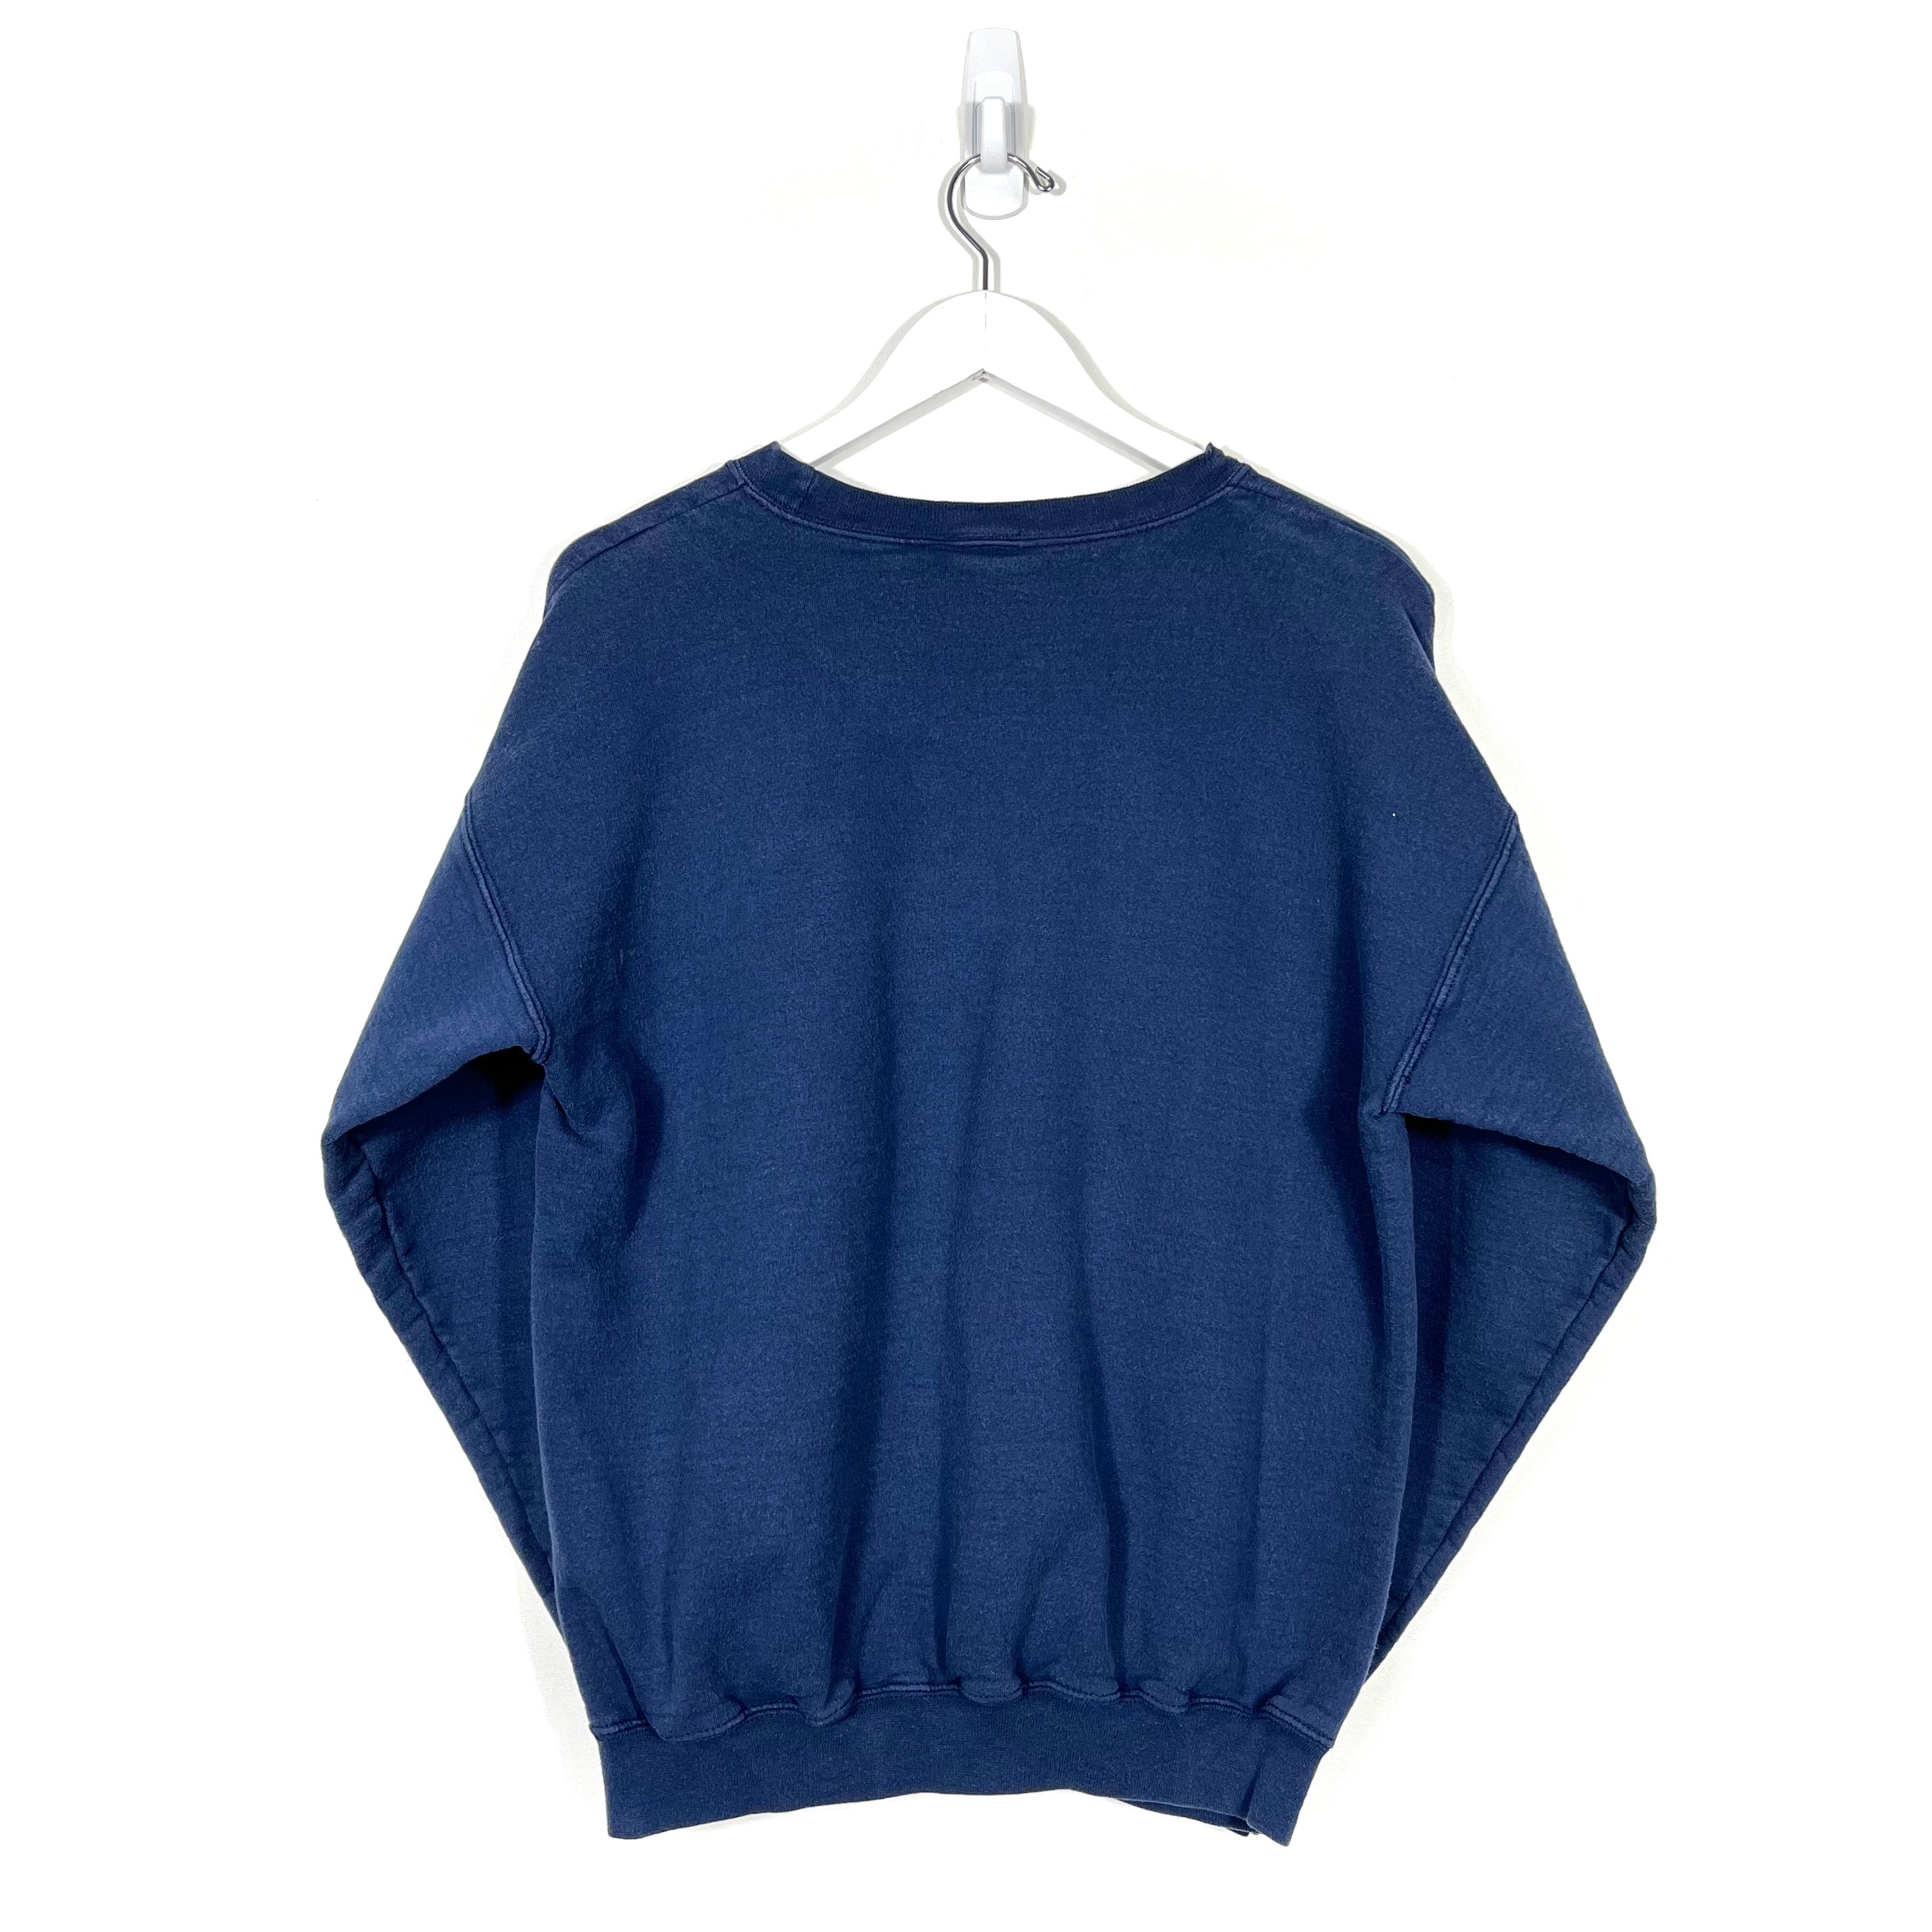 Vintage Yale Crewneck Sweatshirt - Women's Medium